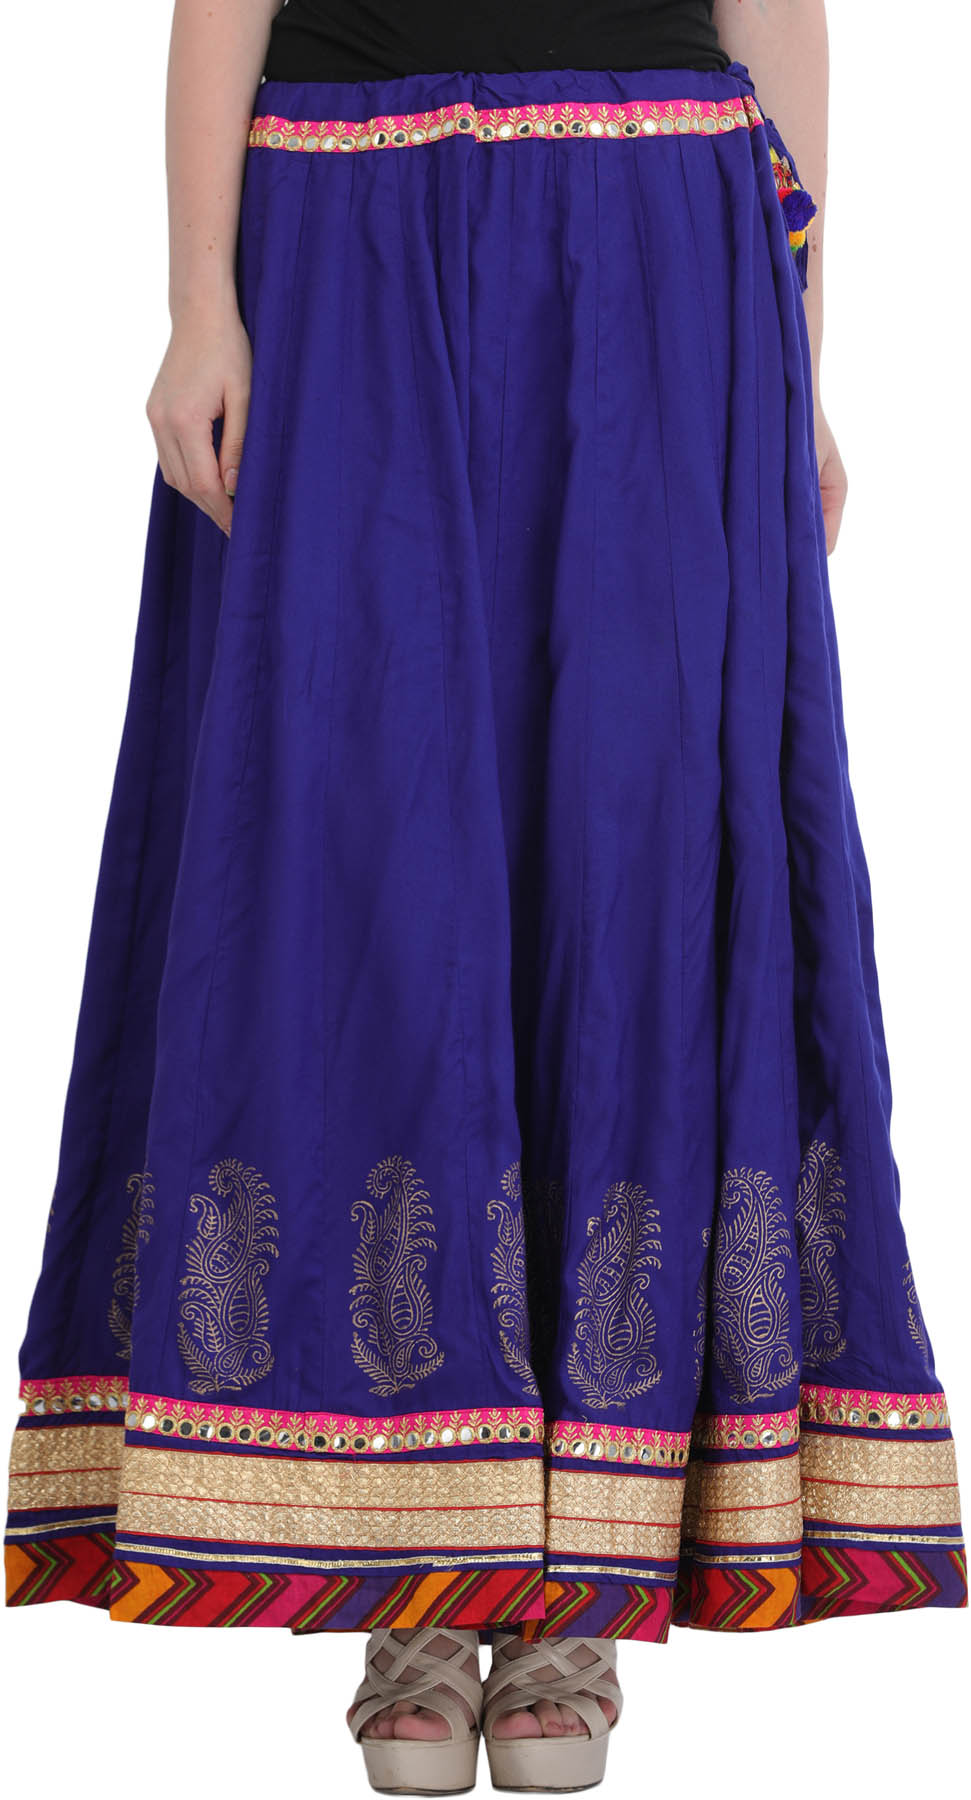 Ghagra Skirt from Jodhpur with Gota Border and Mirrors